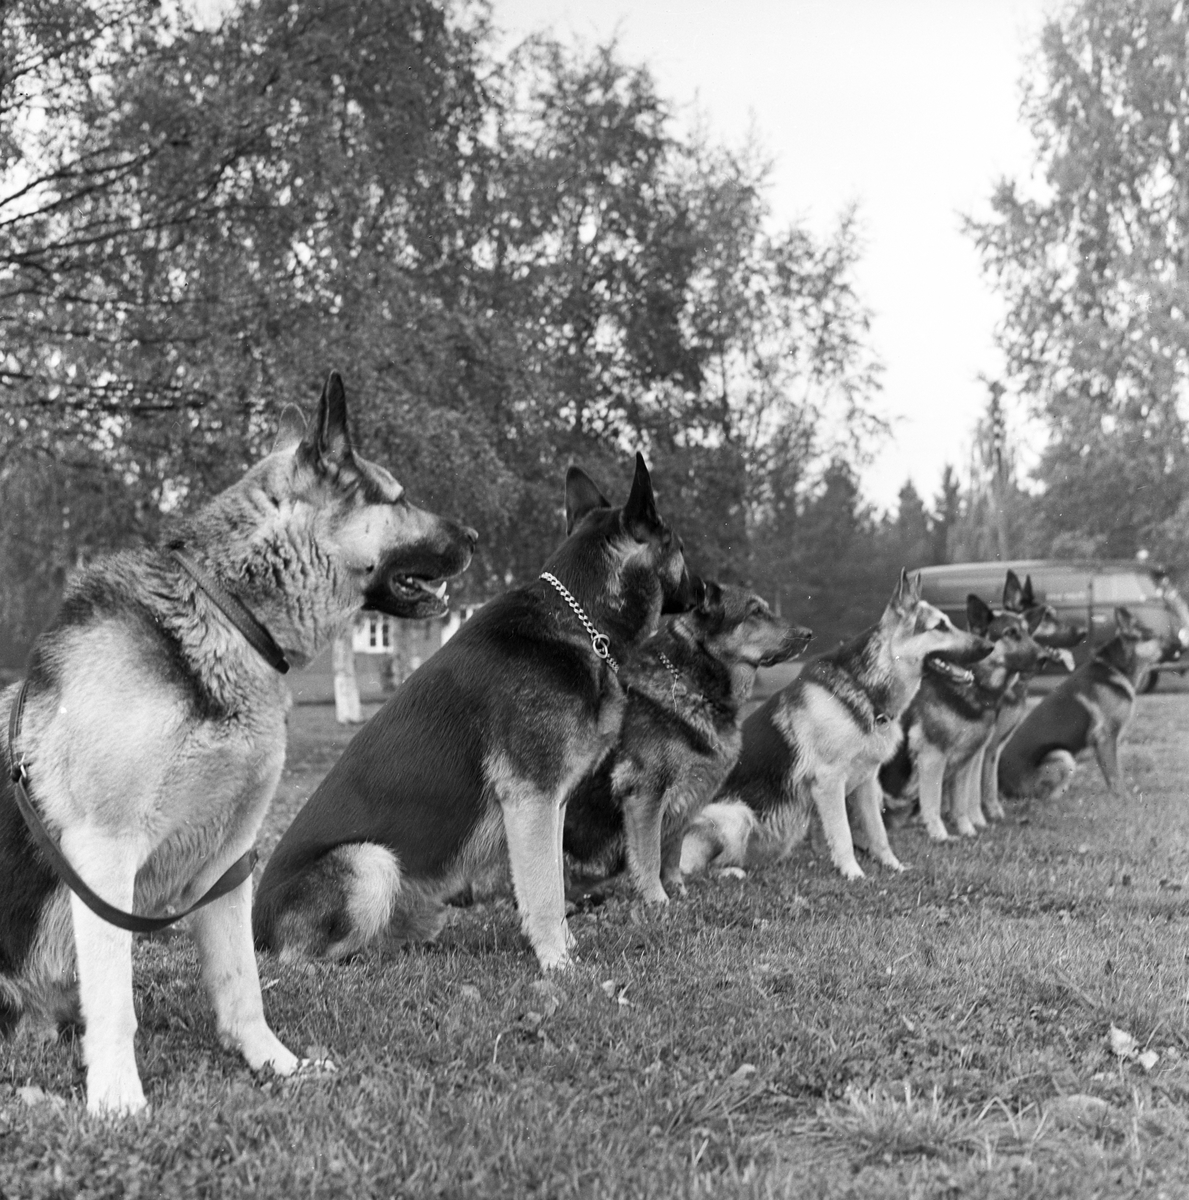 Politihund-konkurranse ved Hamar.
Fotografert 1963